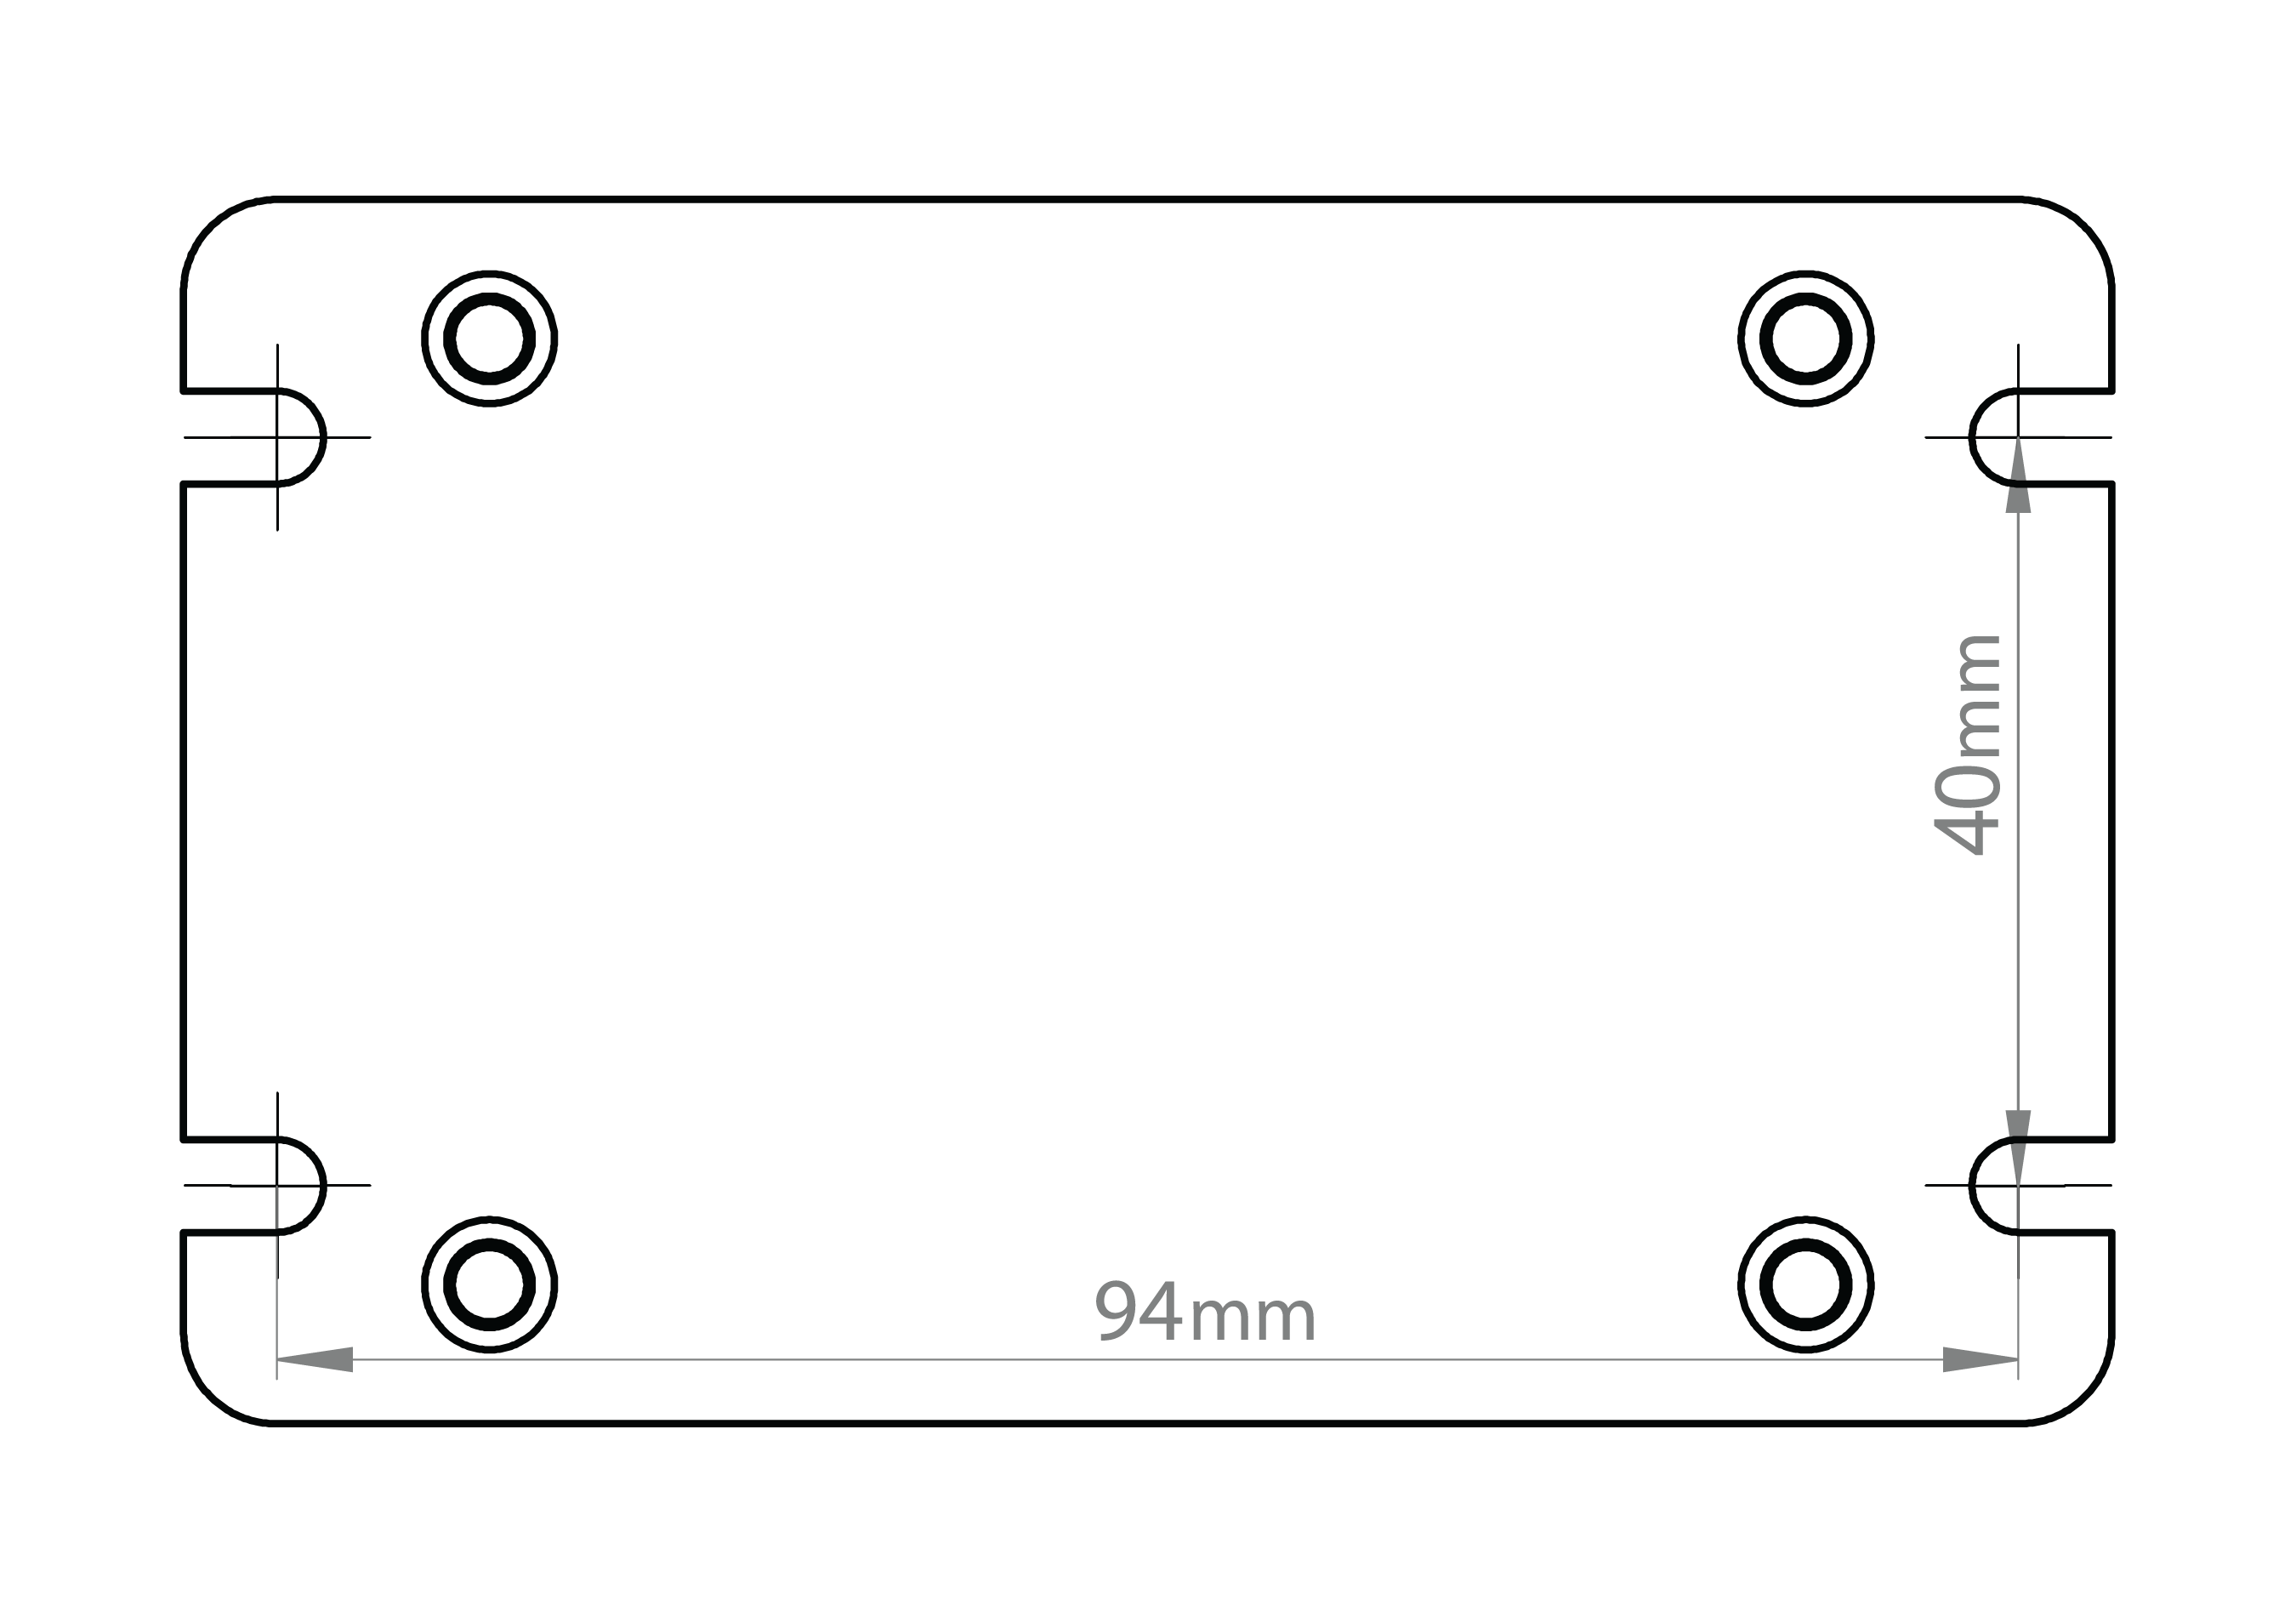 Remoran PR-01 Bottom plate dimensions